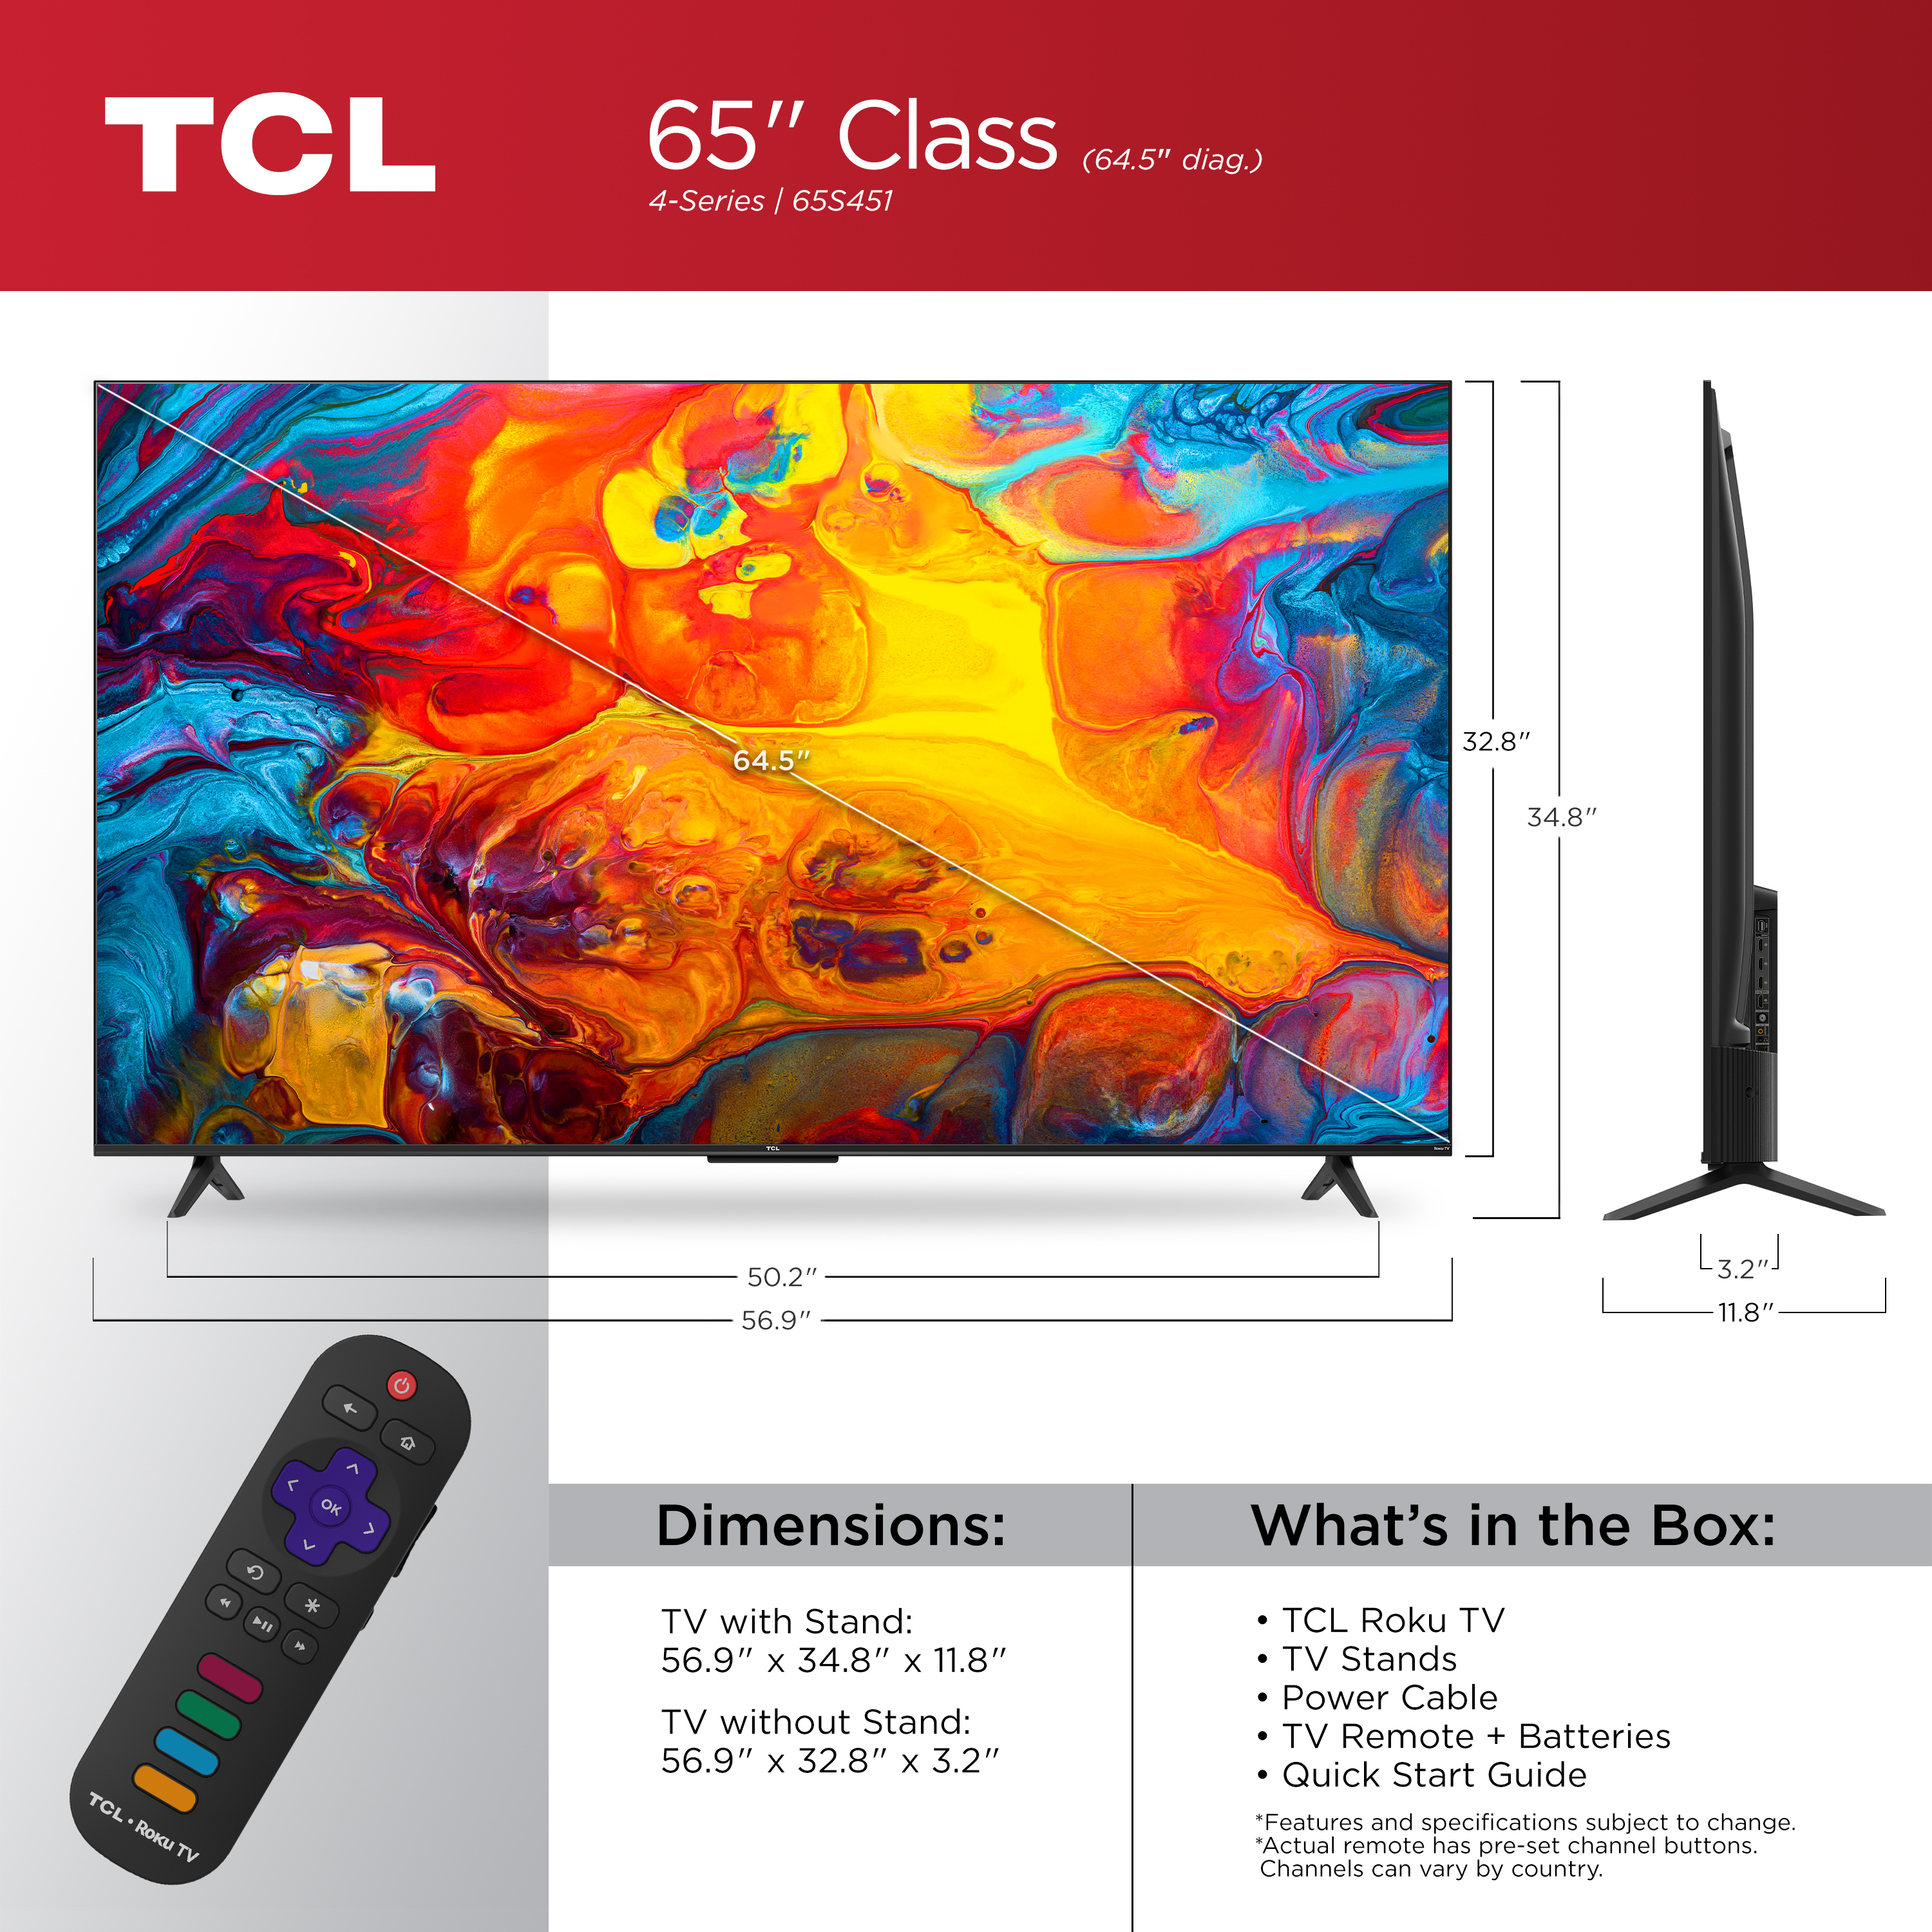 TCL 65" Class 4-Series 4K UHD HDR Smart Roku TV - 65S451 - image 4 of 21